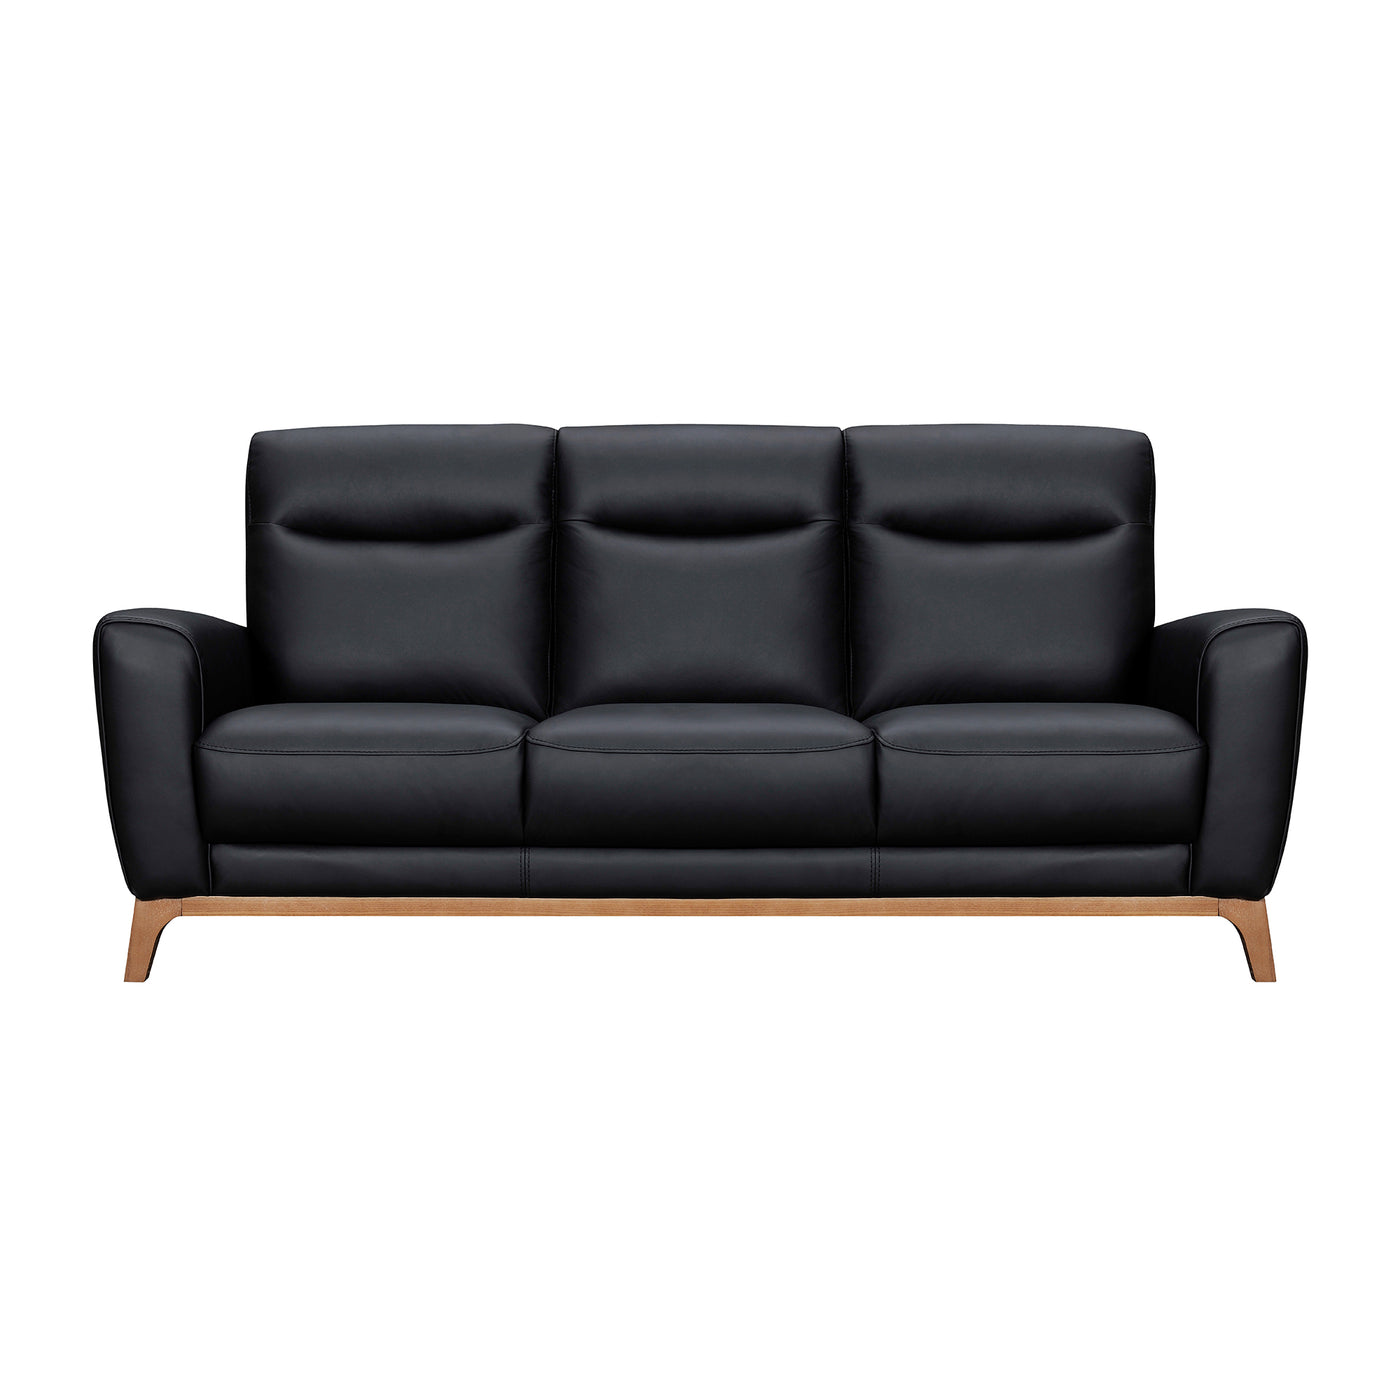 Greyson 83 in. Leather Sofa